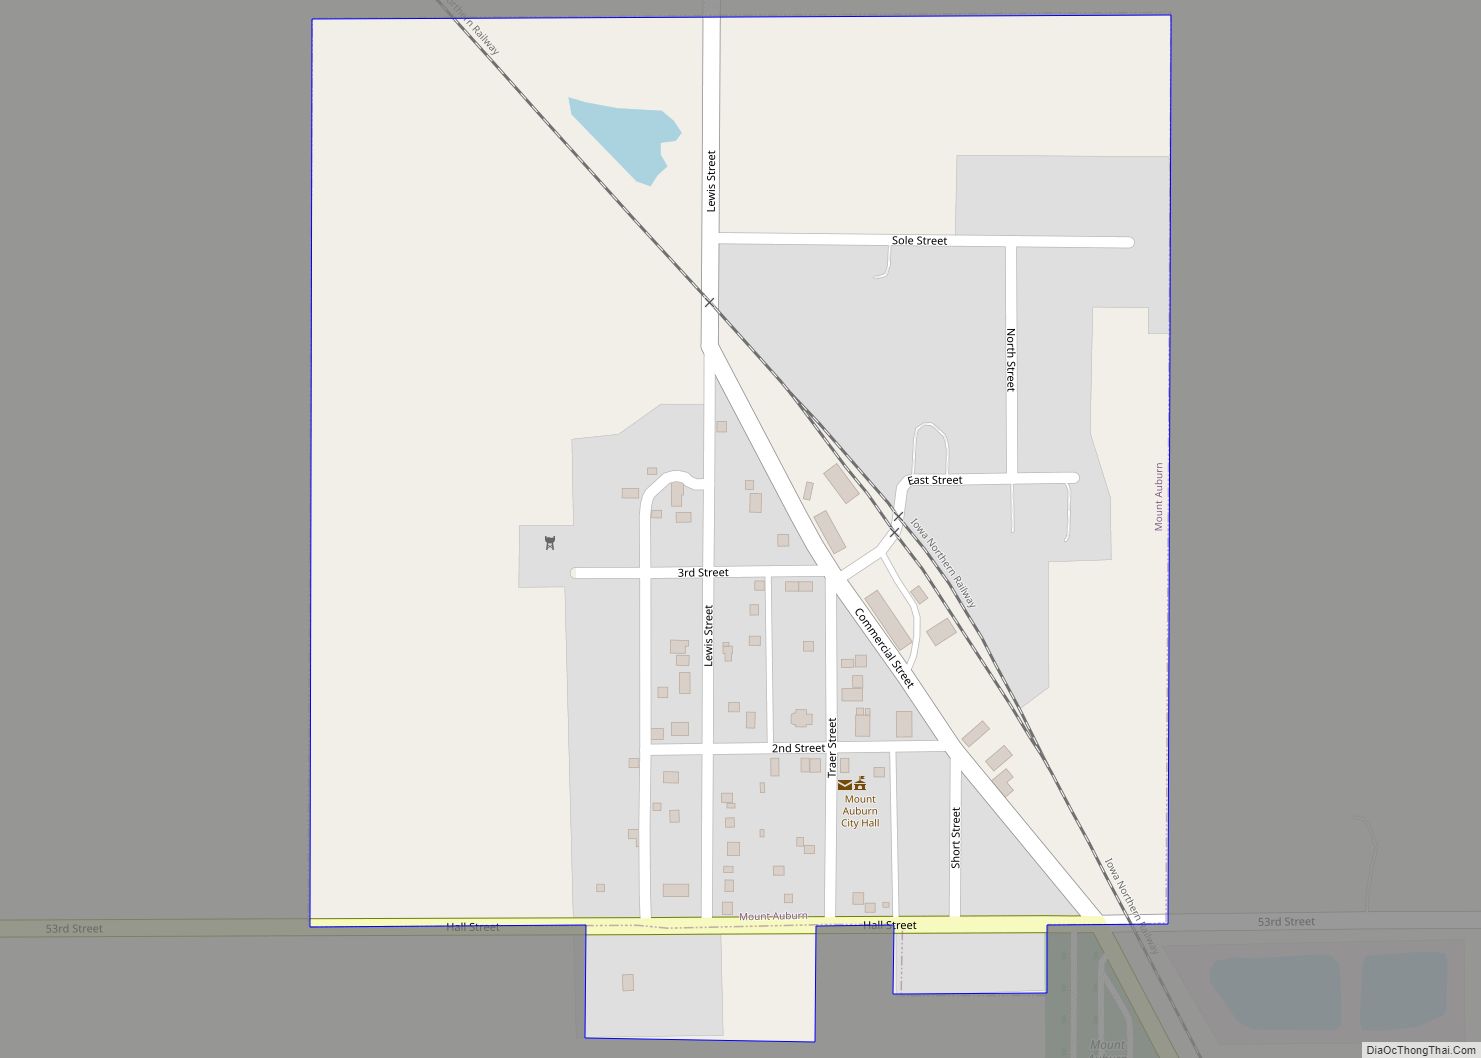 Map of Mount Auburn city